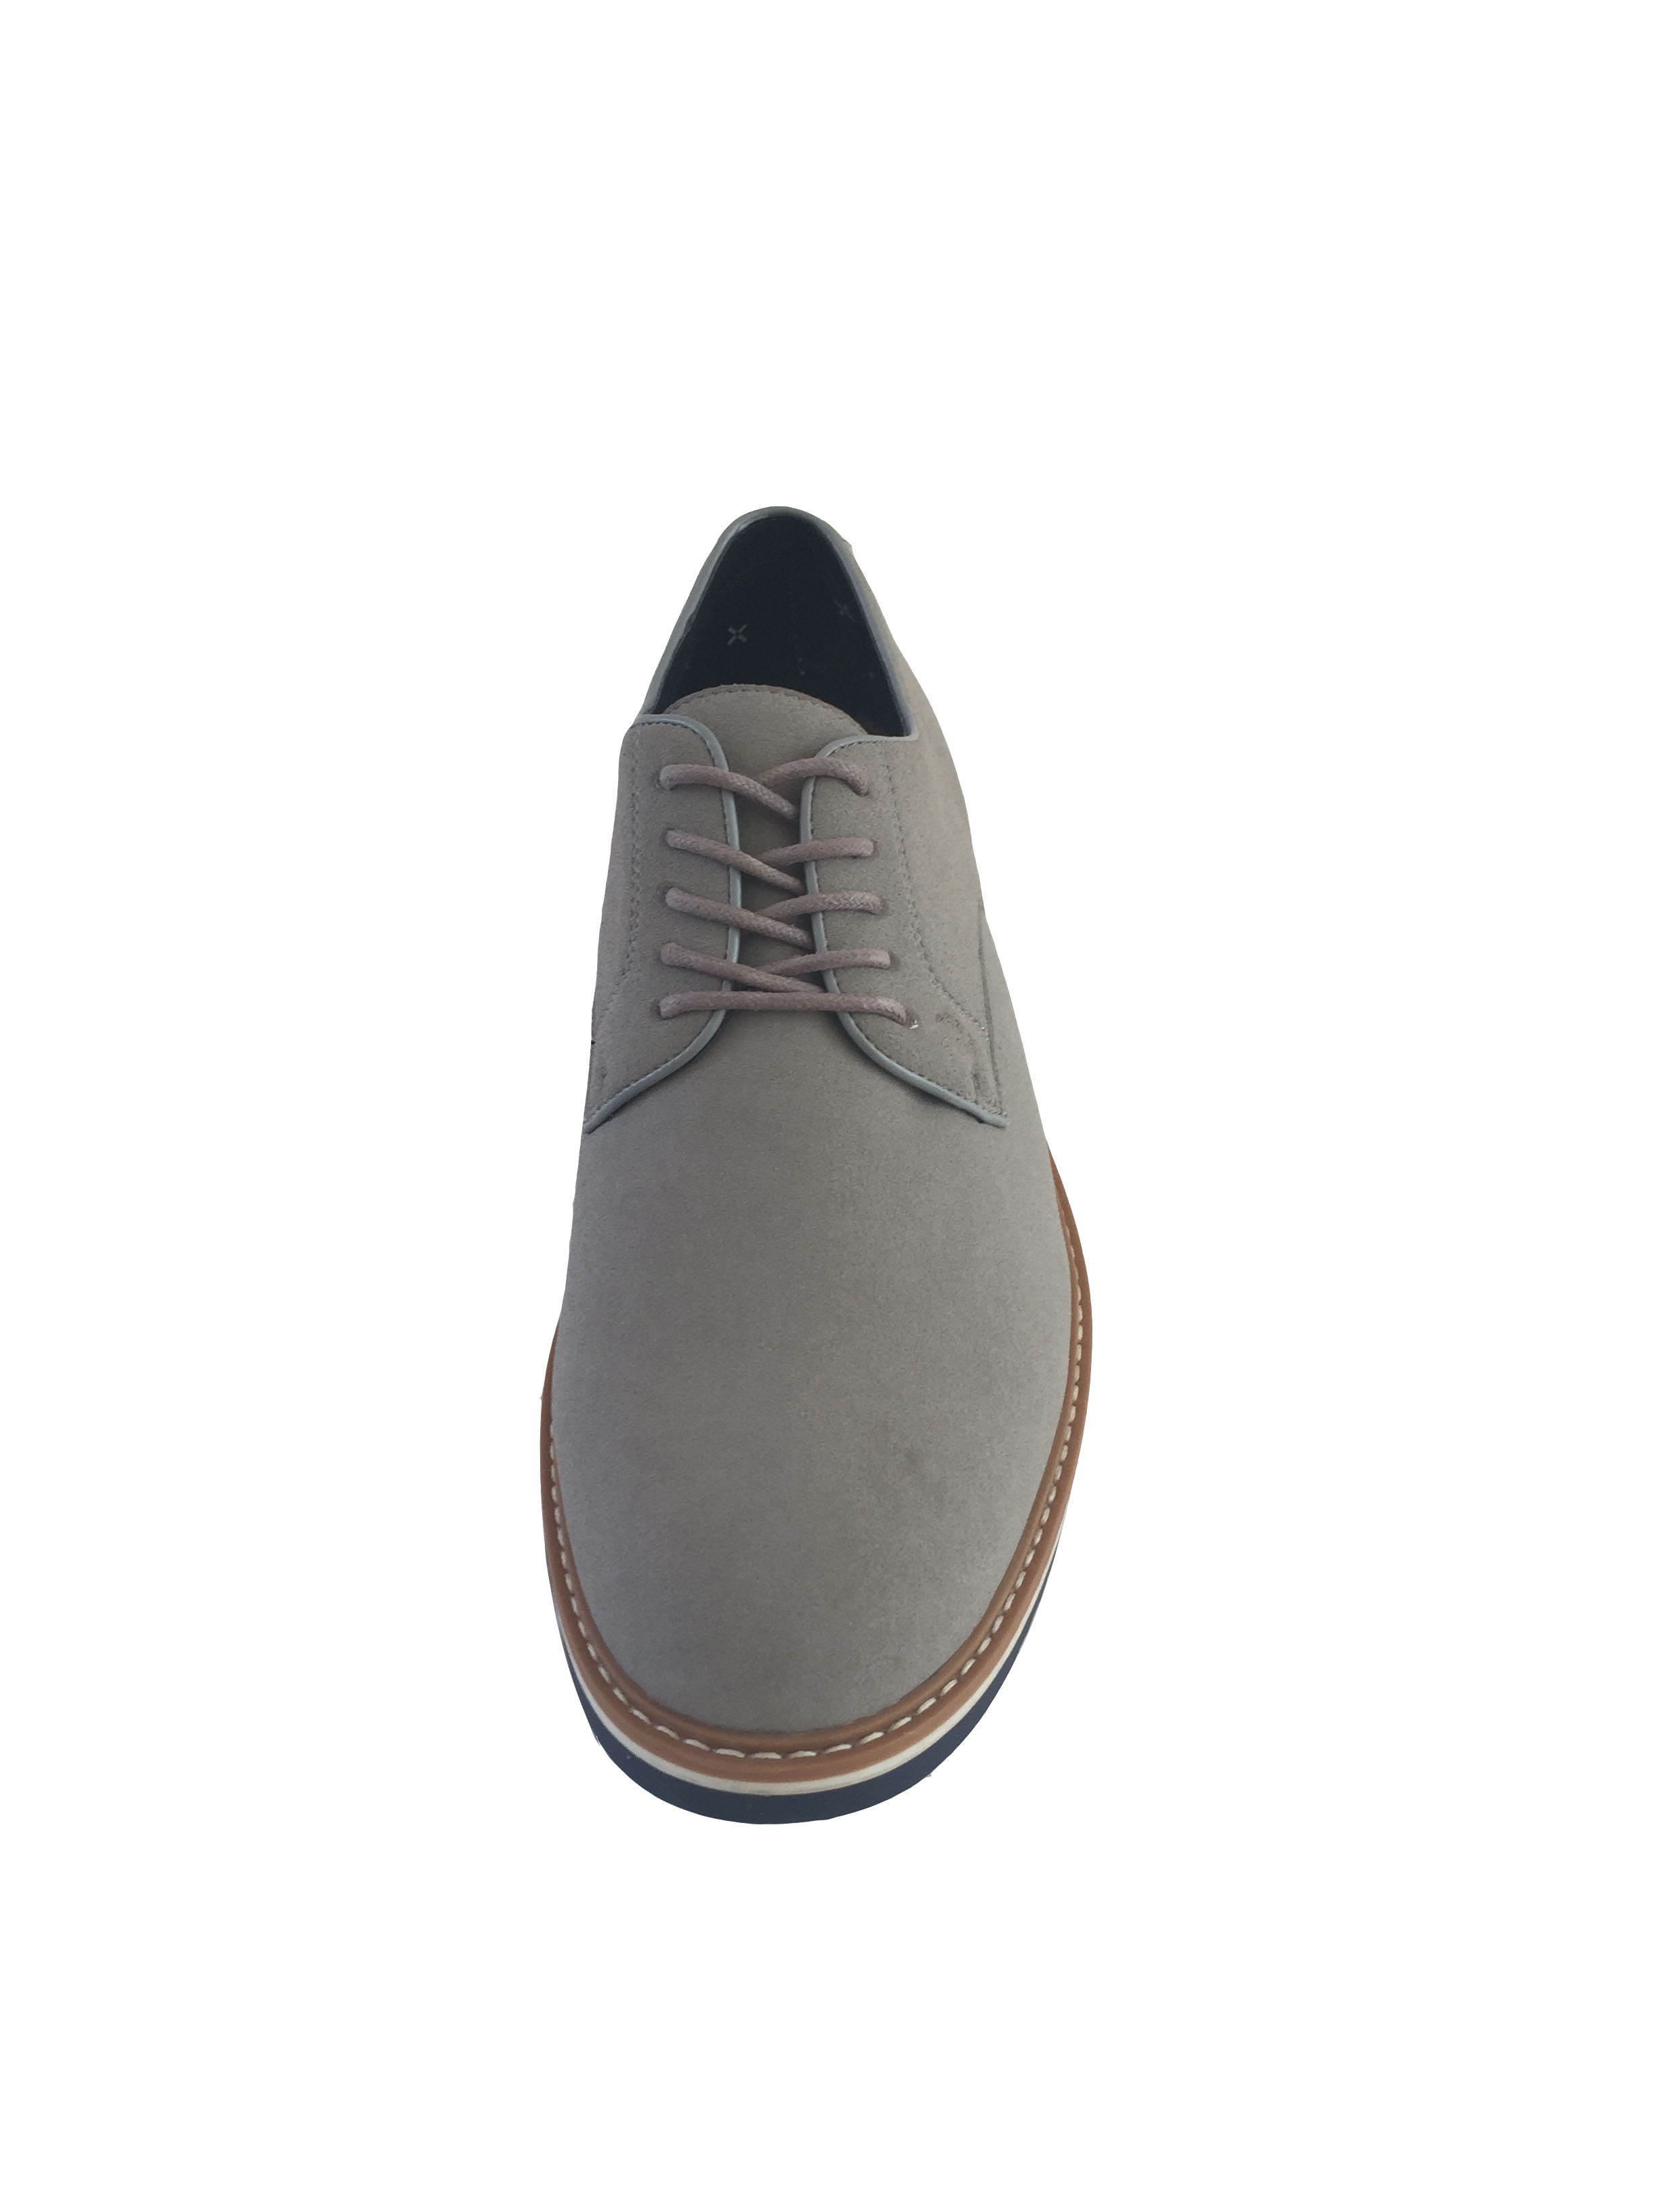 George Men's Plain Toe Casual Oxford Shoe - image 2 of 4